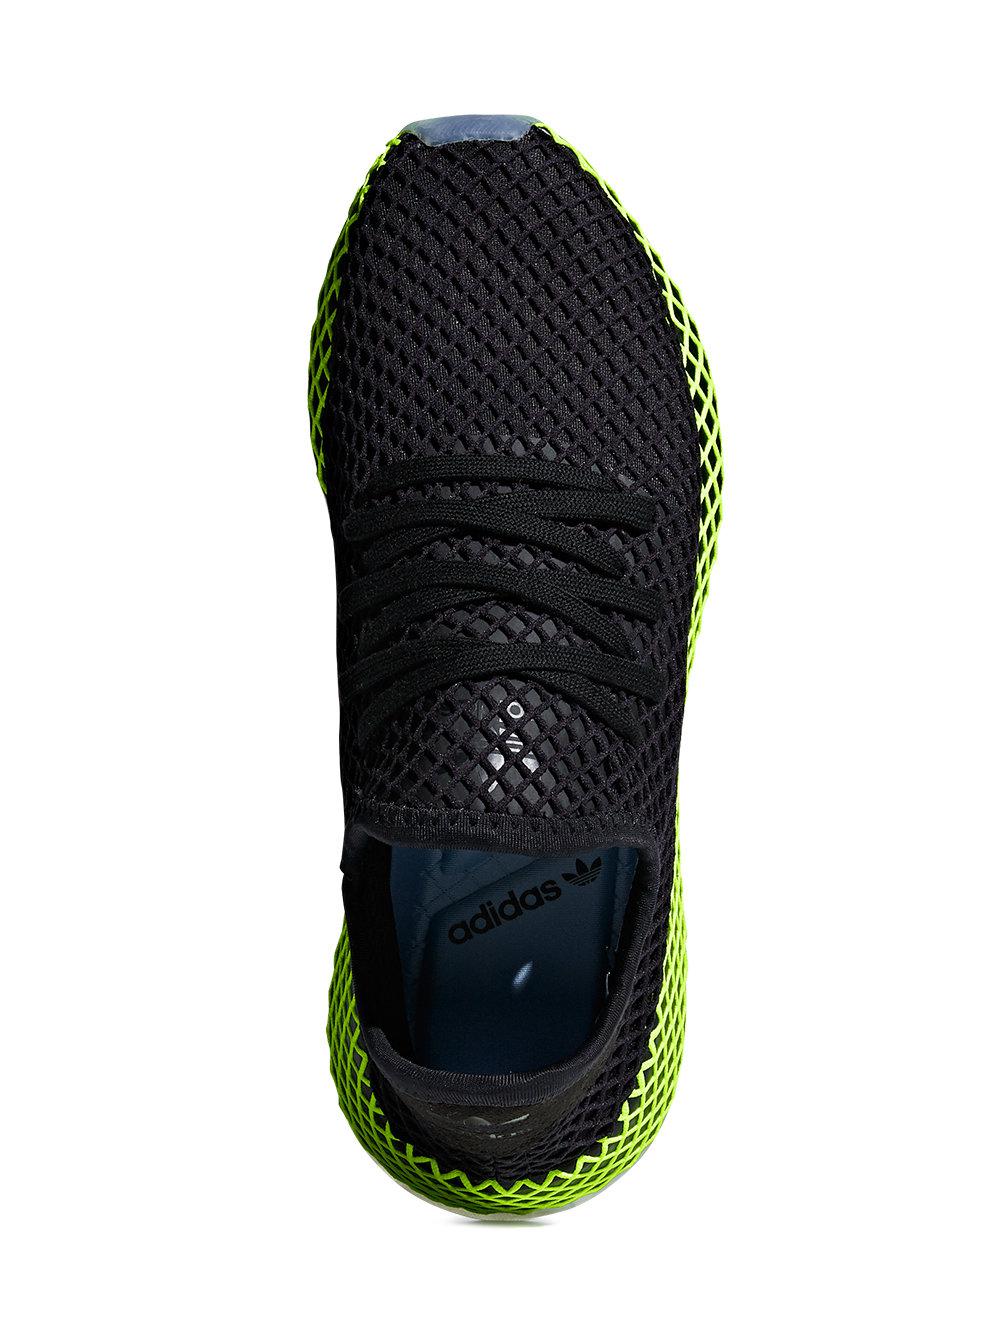 adidas deerupt black and green Off 62% - adencon.com